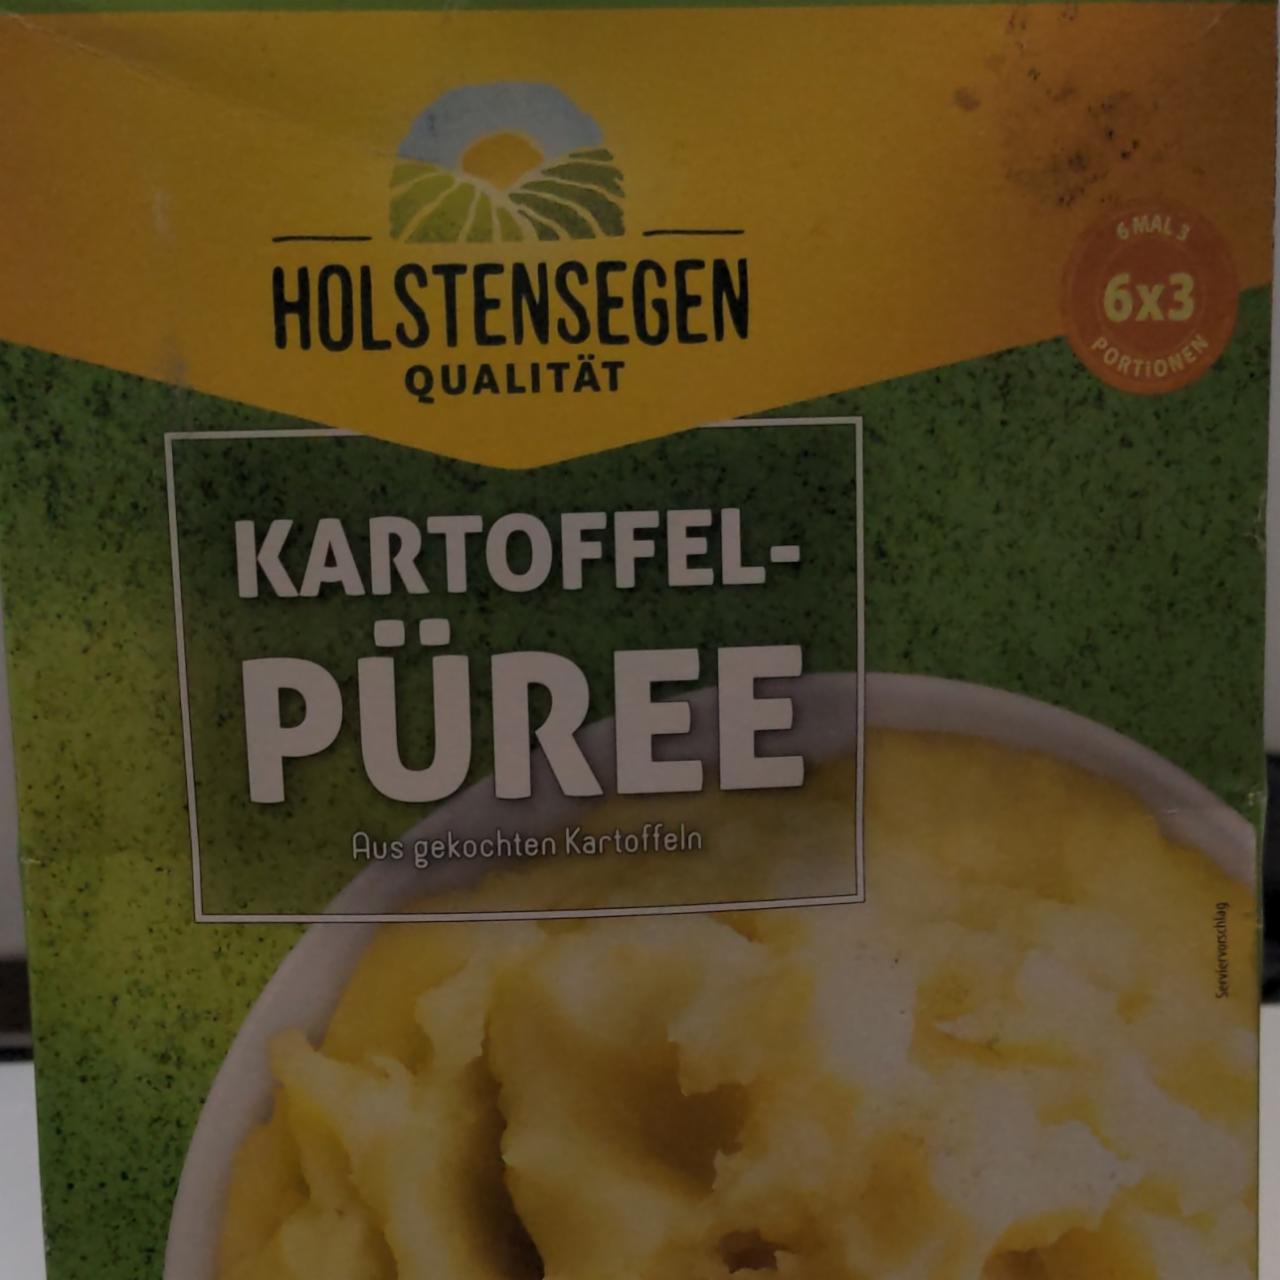 Фото - Картофельное пюре Kartoffel Püree Holstensegen Qualität